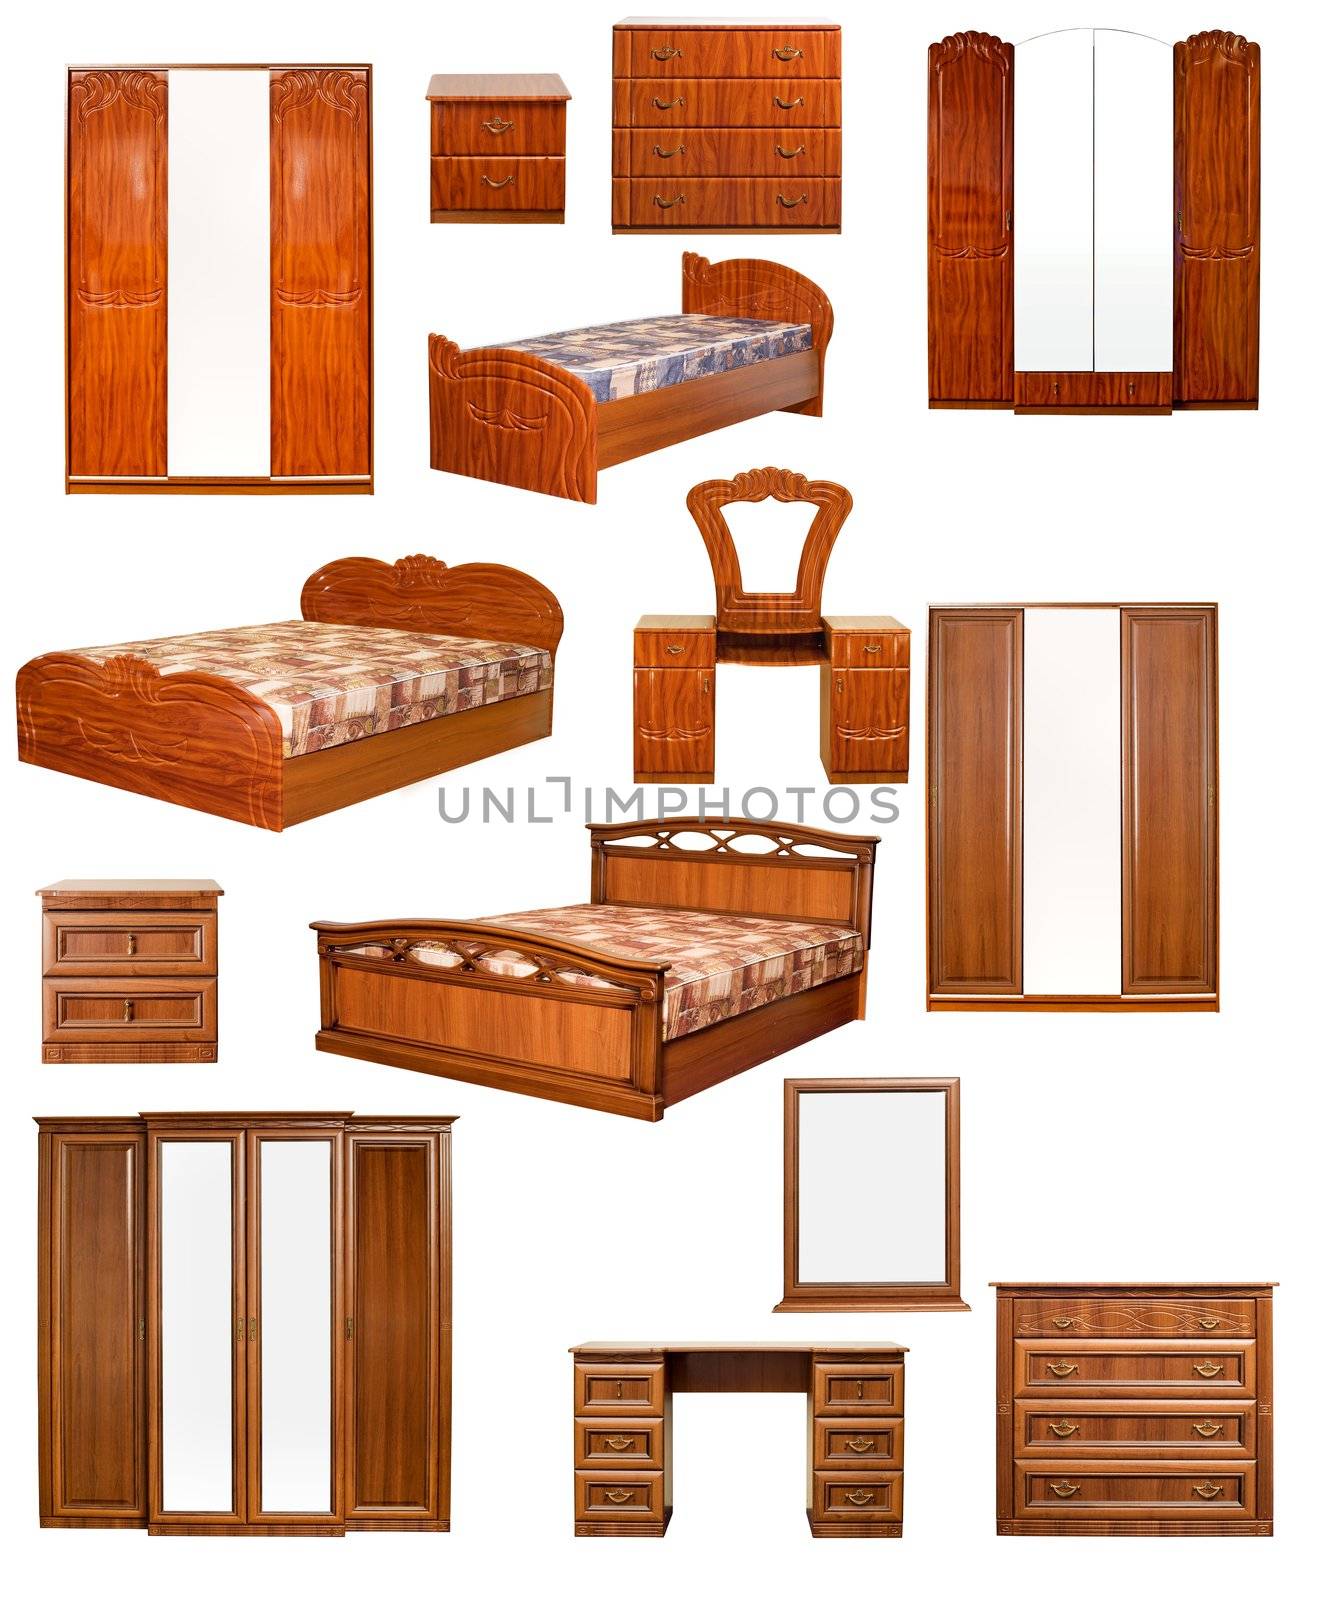 An image of various furniture